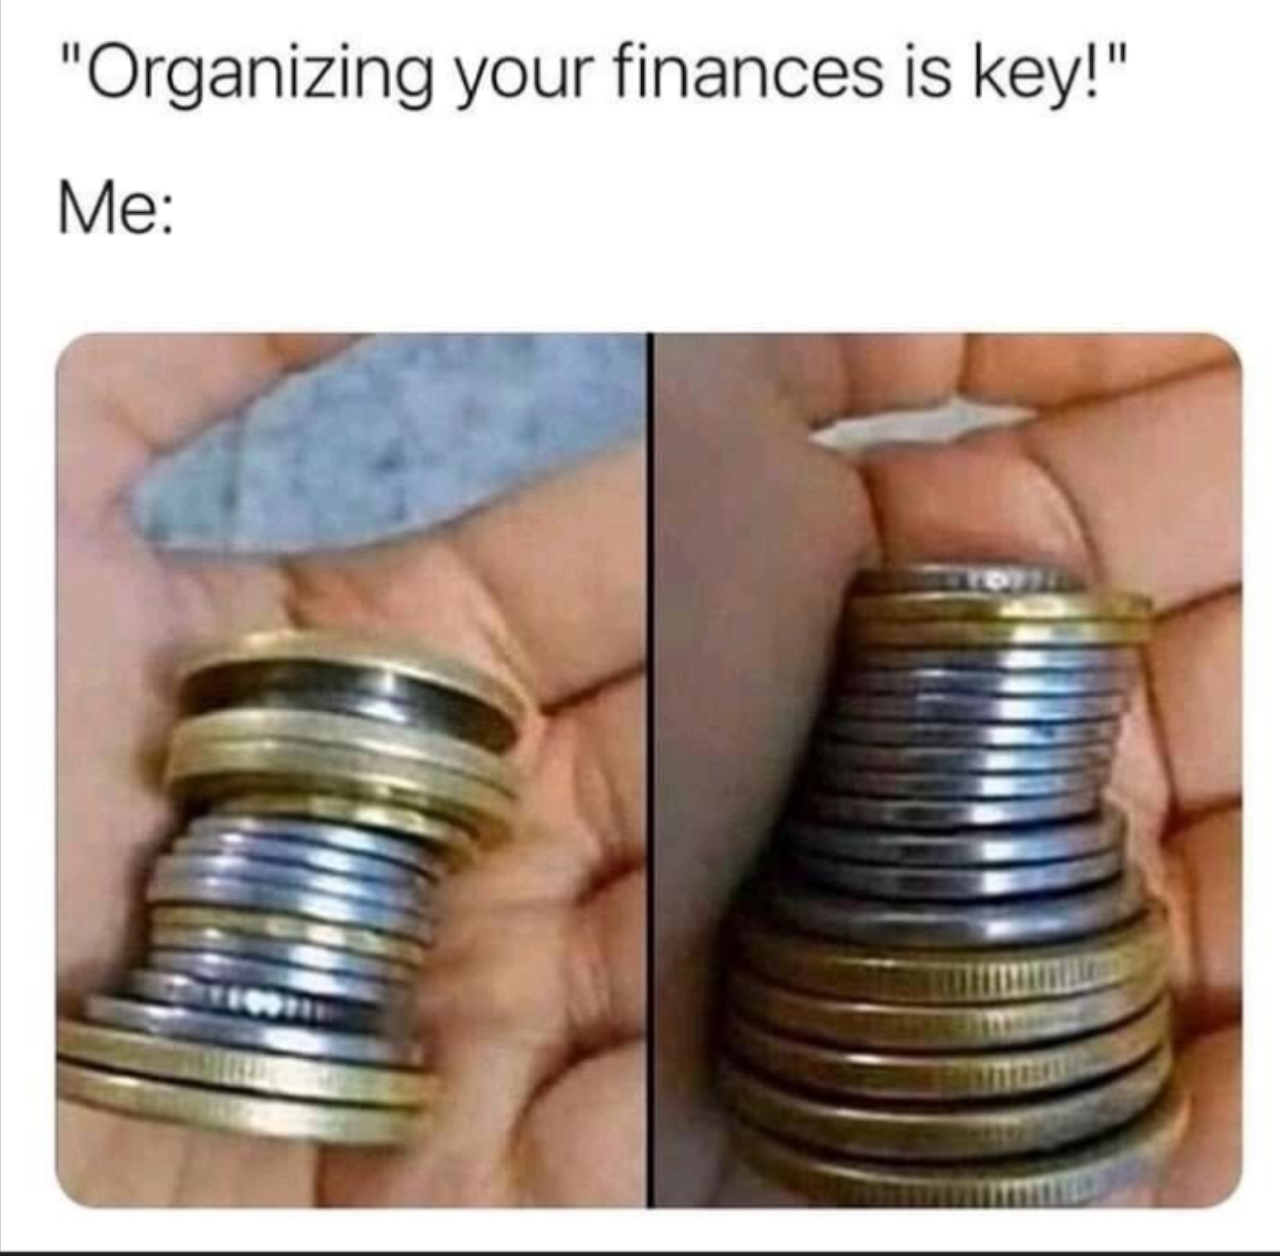 me organising my finances - "Organizing your finances is key!" Me